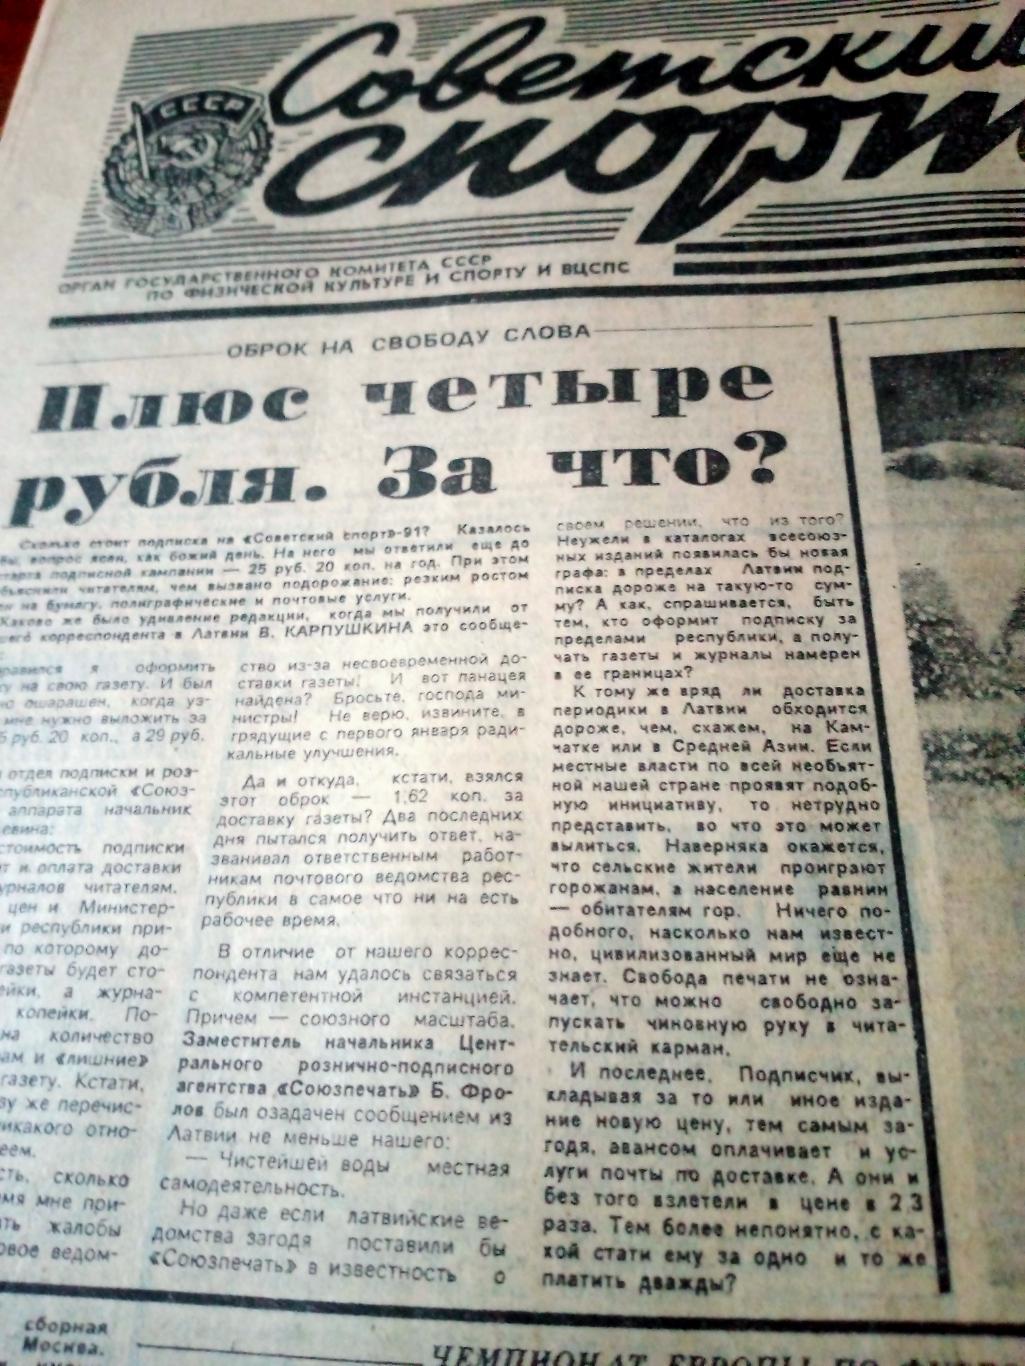 АКЦИЯ! Советский спорт. 1990 год. 13 сентября